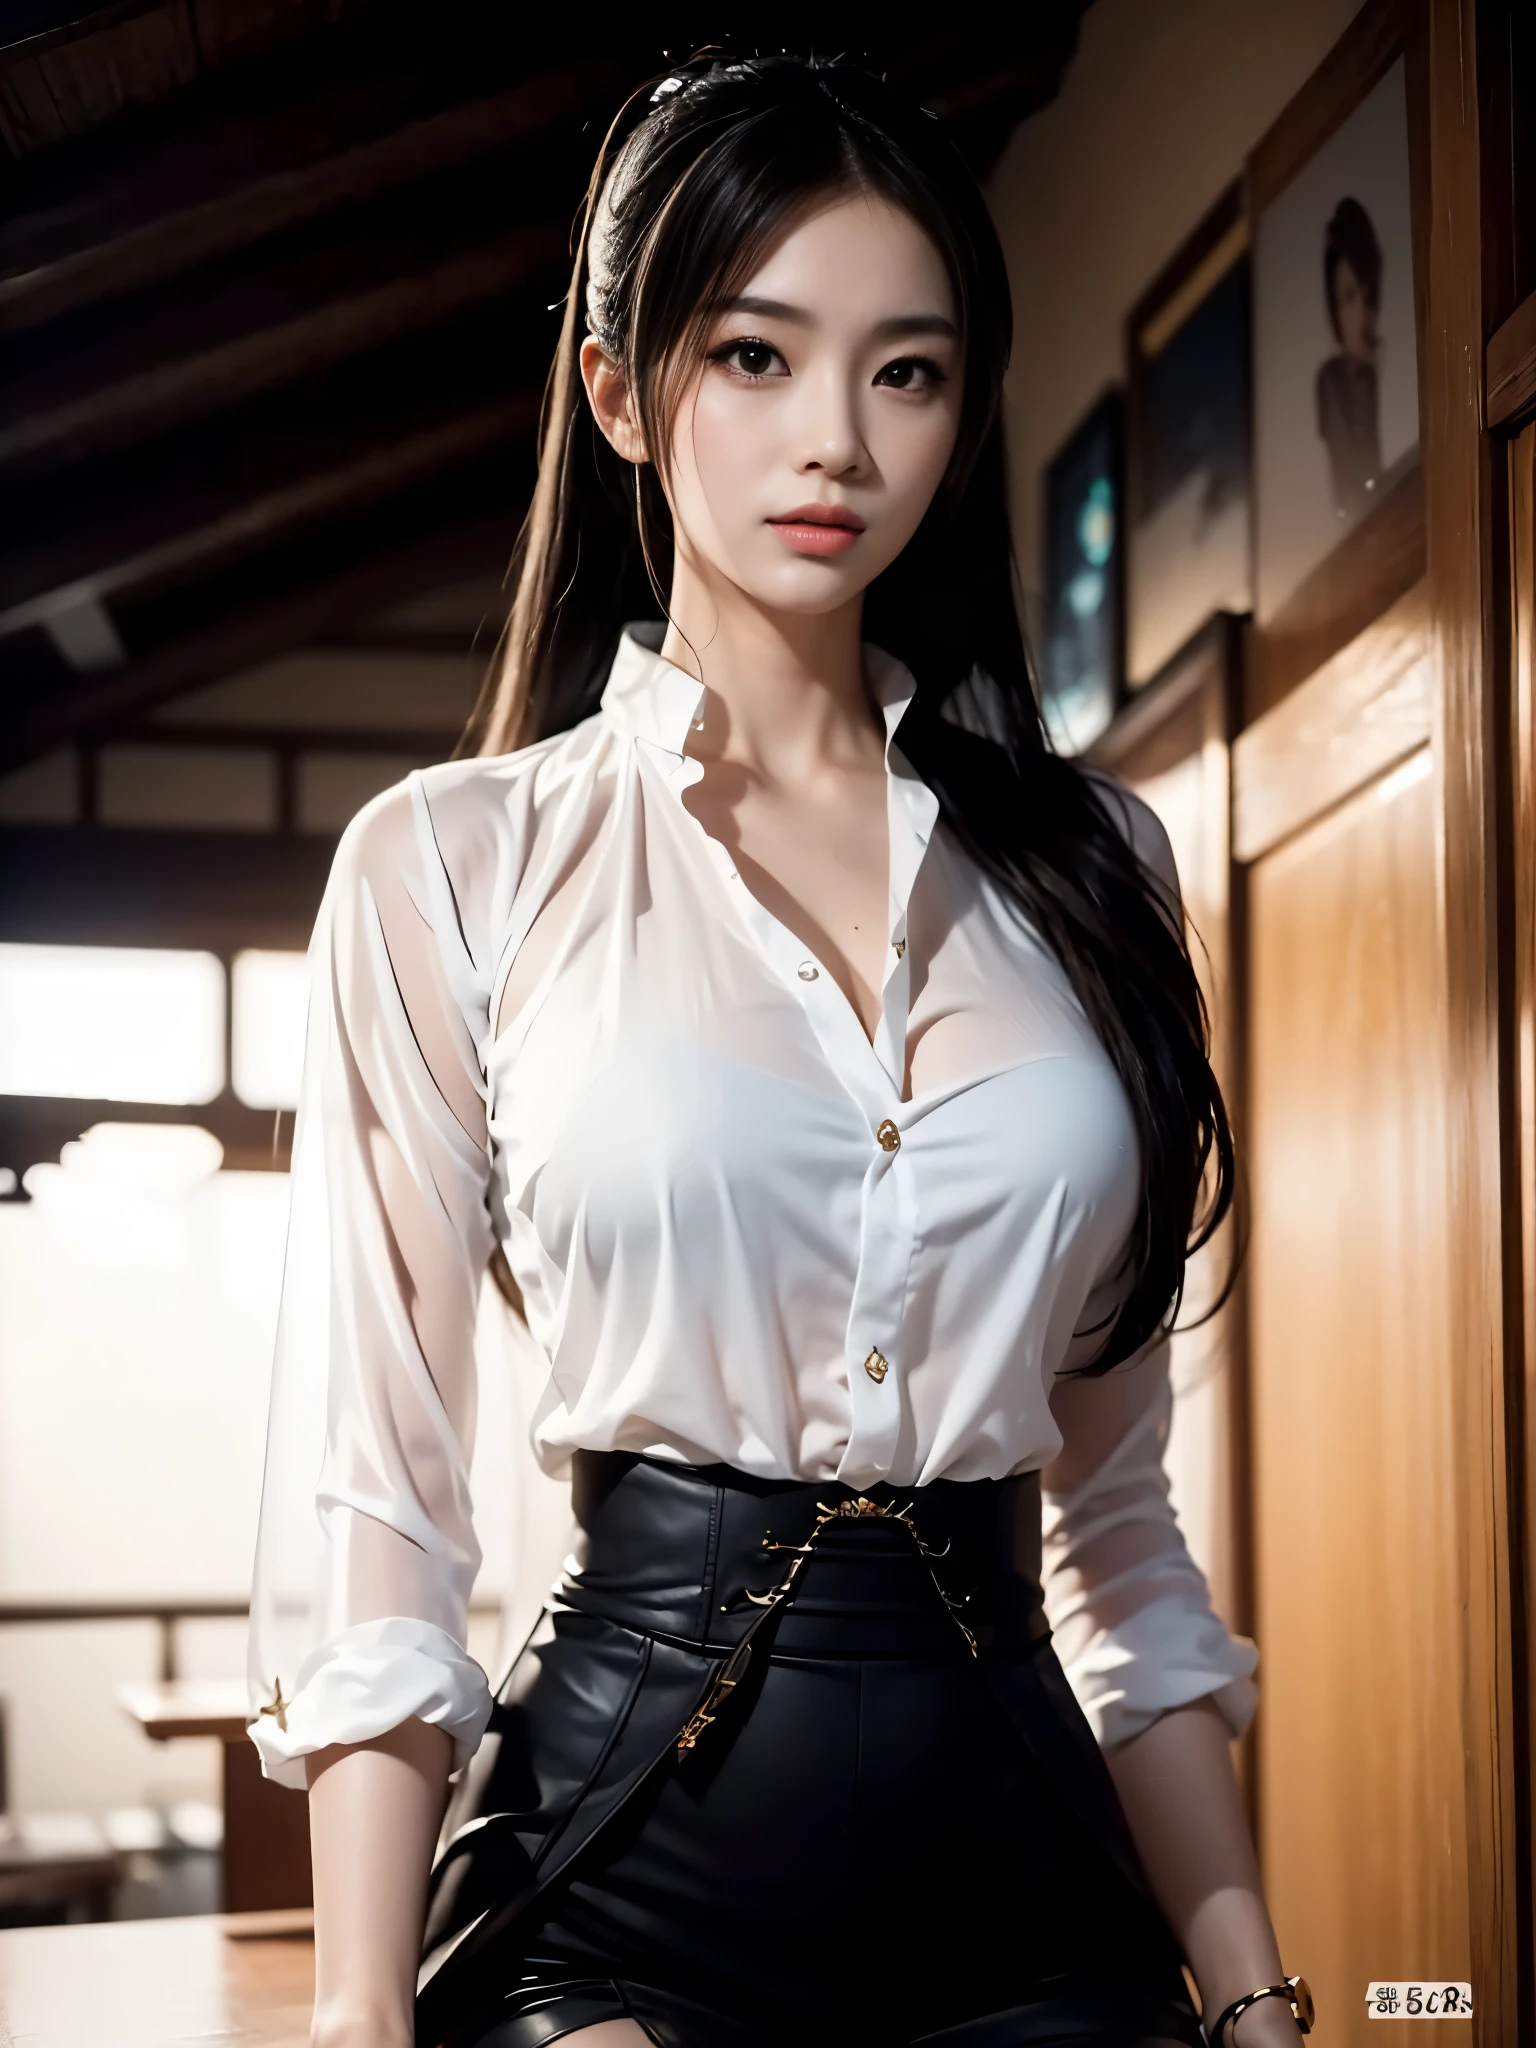 Mai Shiranui，女性の全身肖像画，アジアの女神の顔，长且直的头发扎着ハイポニーテール，濡れた白いシャツとワンステップスカート，ブラウンガーターストッキング，地面にひざまずく，頭を上げてカメラを見てください。((8k+超高解像度+超高解像度+傑作+非常に詳細+受賞歴+受賞歴のある)),(完璧な顔+スーパーモデル+デリケートな肌+ハイポニーテール+巨大な胸+完璧な手+美しい手+完璧な手指+美しい手指+完璧な脚+完璧な足),[[[筋]]],(((解剖学的に正しい))) ，画像は非常に鮮明です，細部までこだわった，高品質；巧みなライト操作，ドラマチックな雰囲気を作り出す；ブラシストロークマスター，完璧なプロフェッショナリズム，心に残る芸術作品。